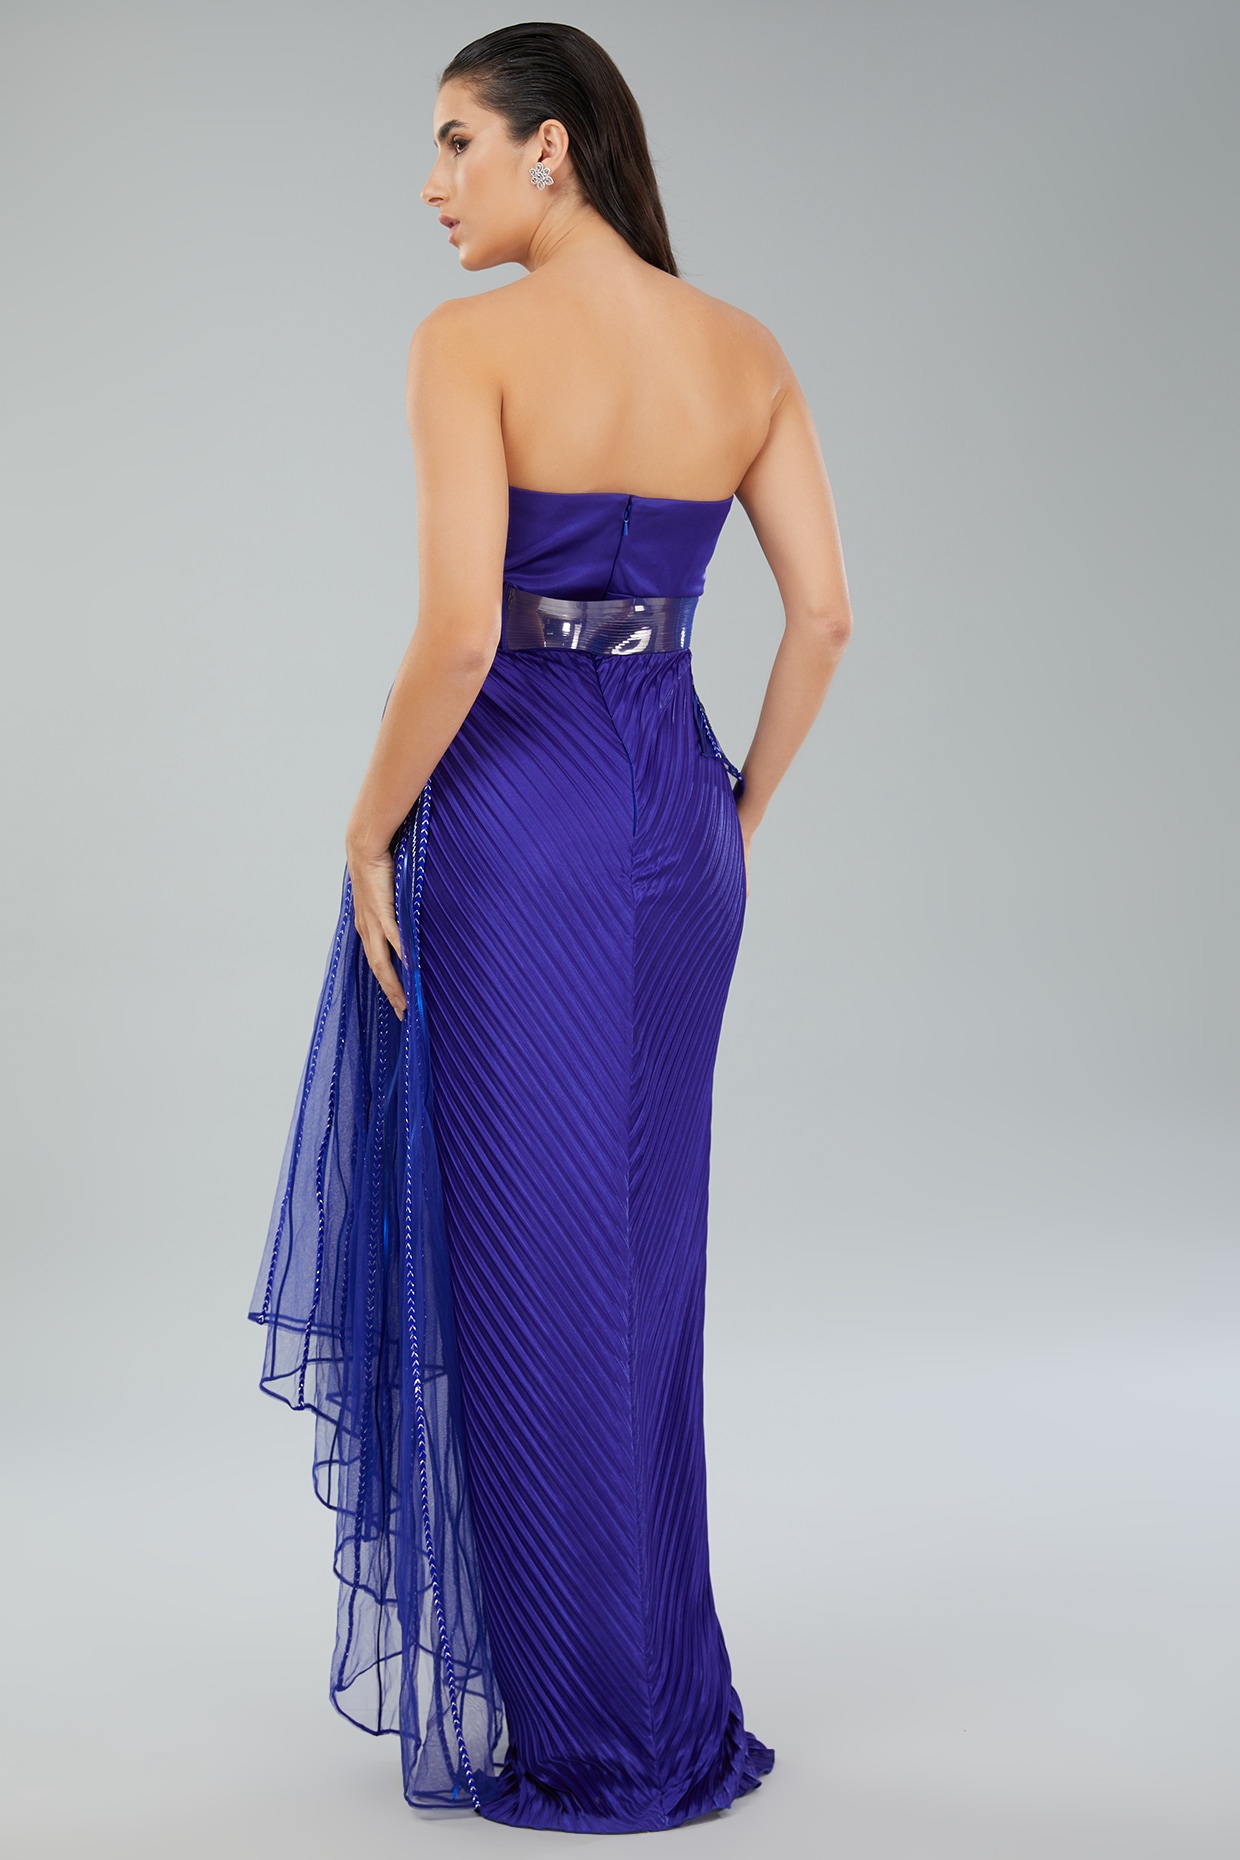 Sheer V-Neck Royal Blue Lace Prom Dress - PromGirl